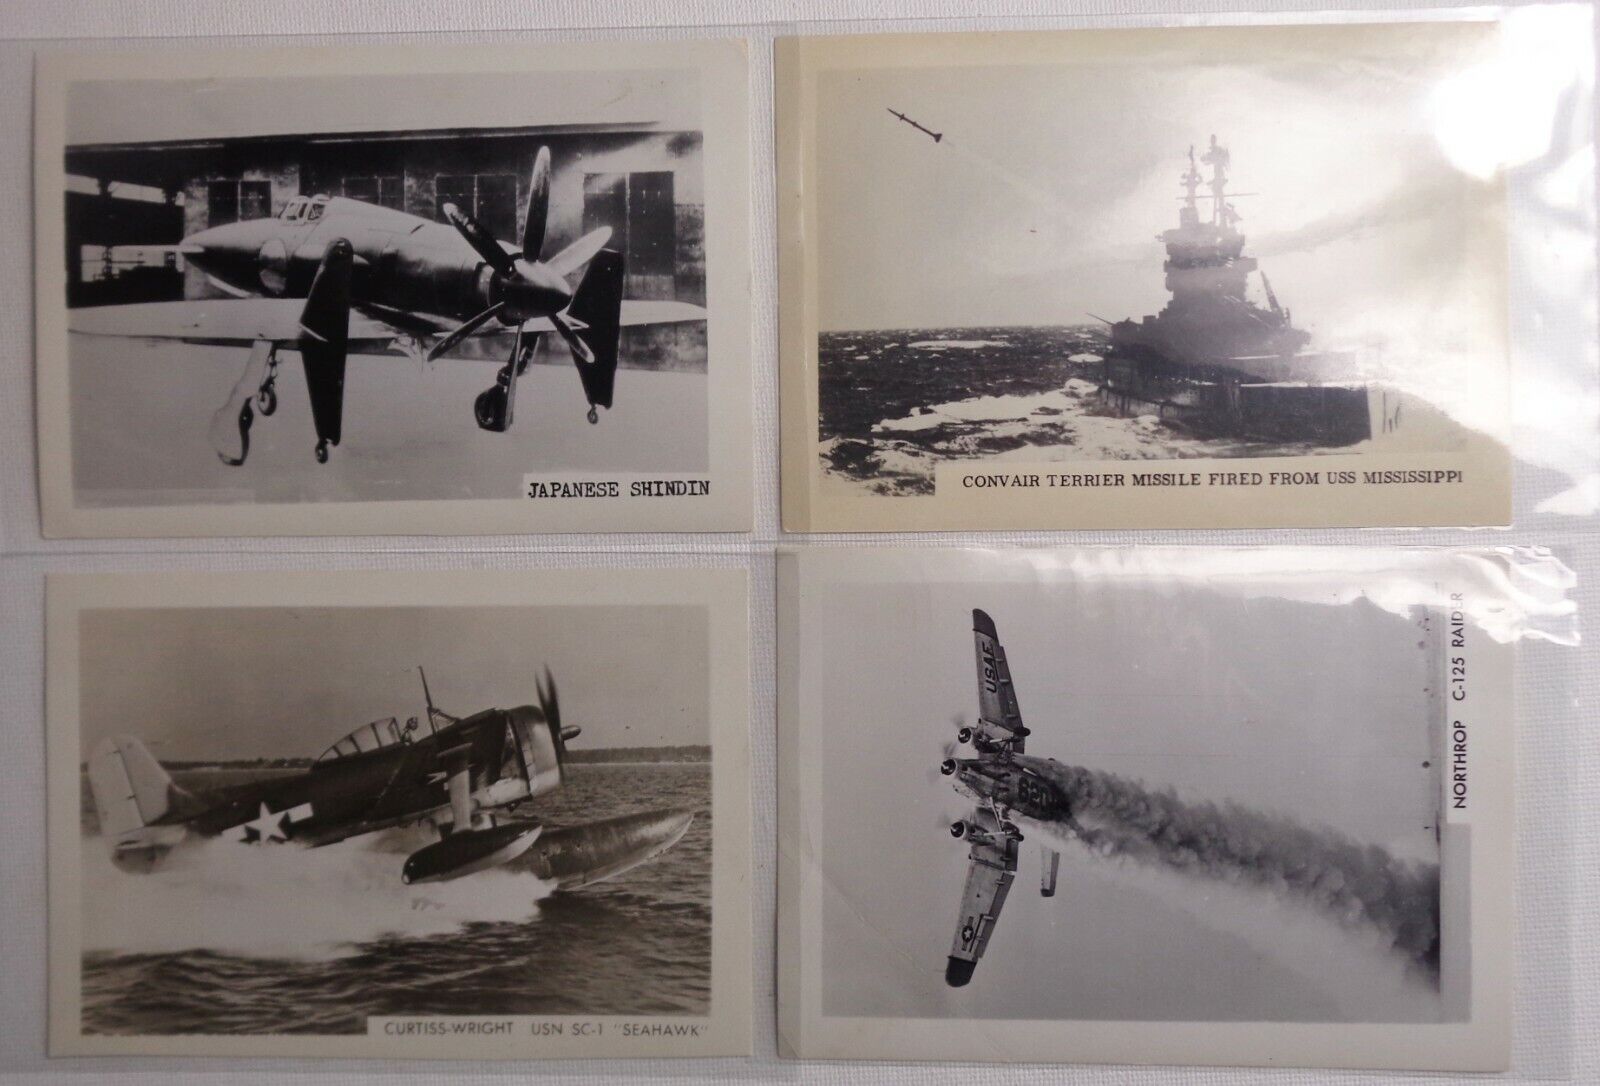 Historic 5 Photos Navy Curtiss Seahawk Convair Missile Raider Japanese Shindin 